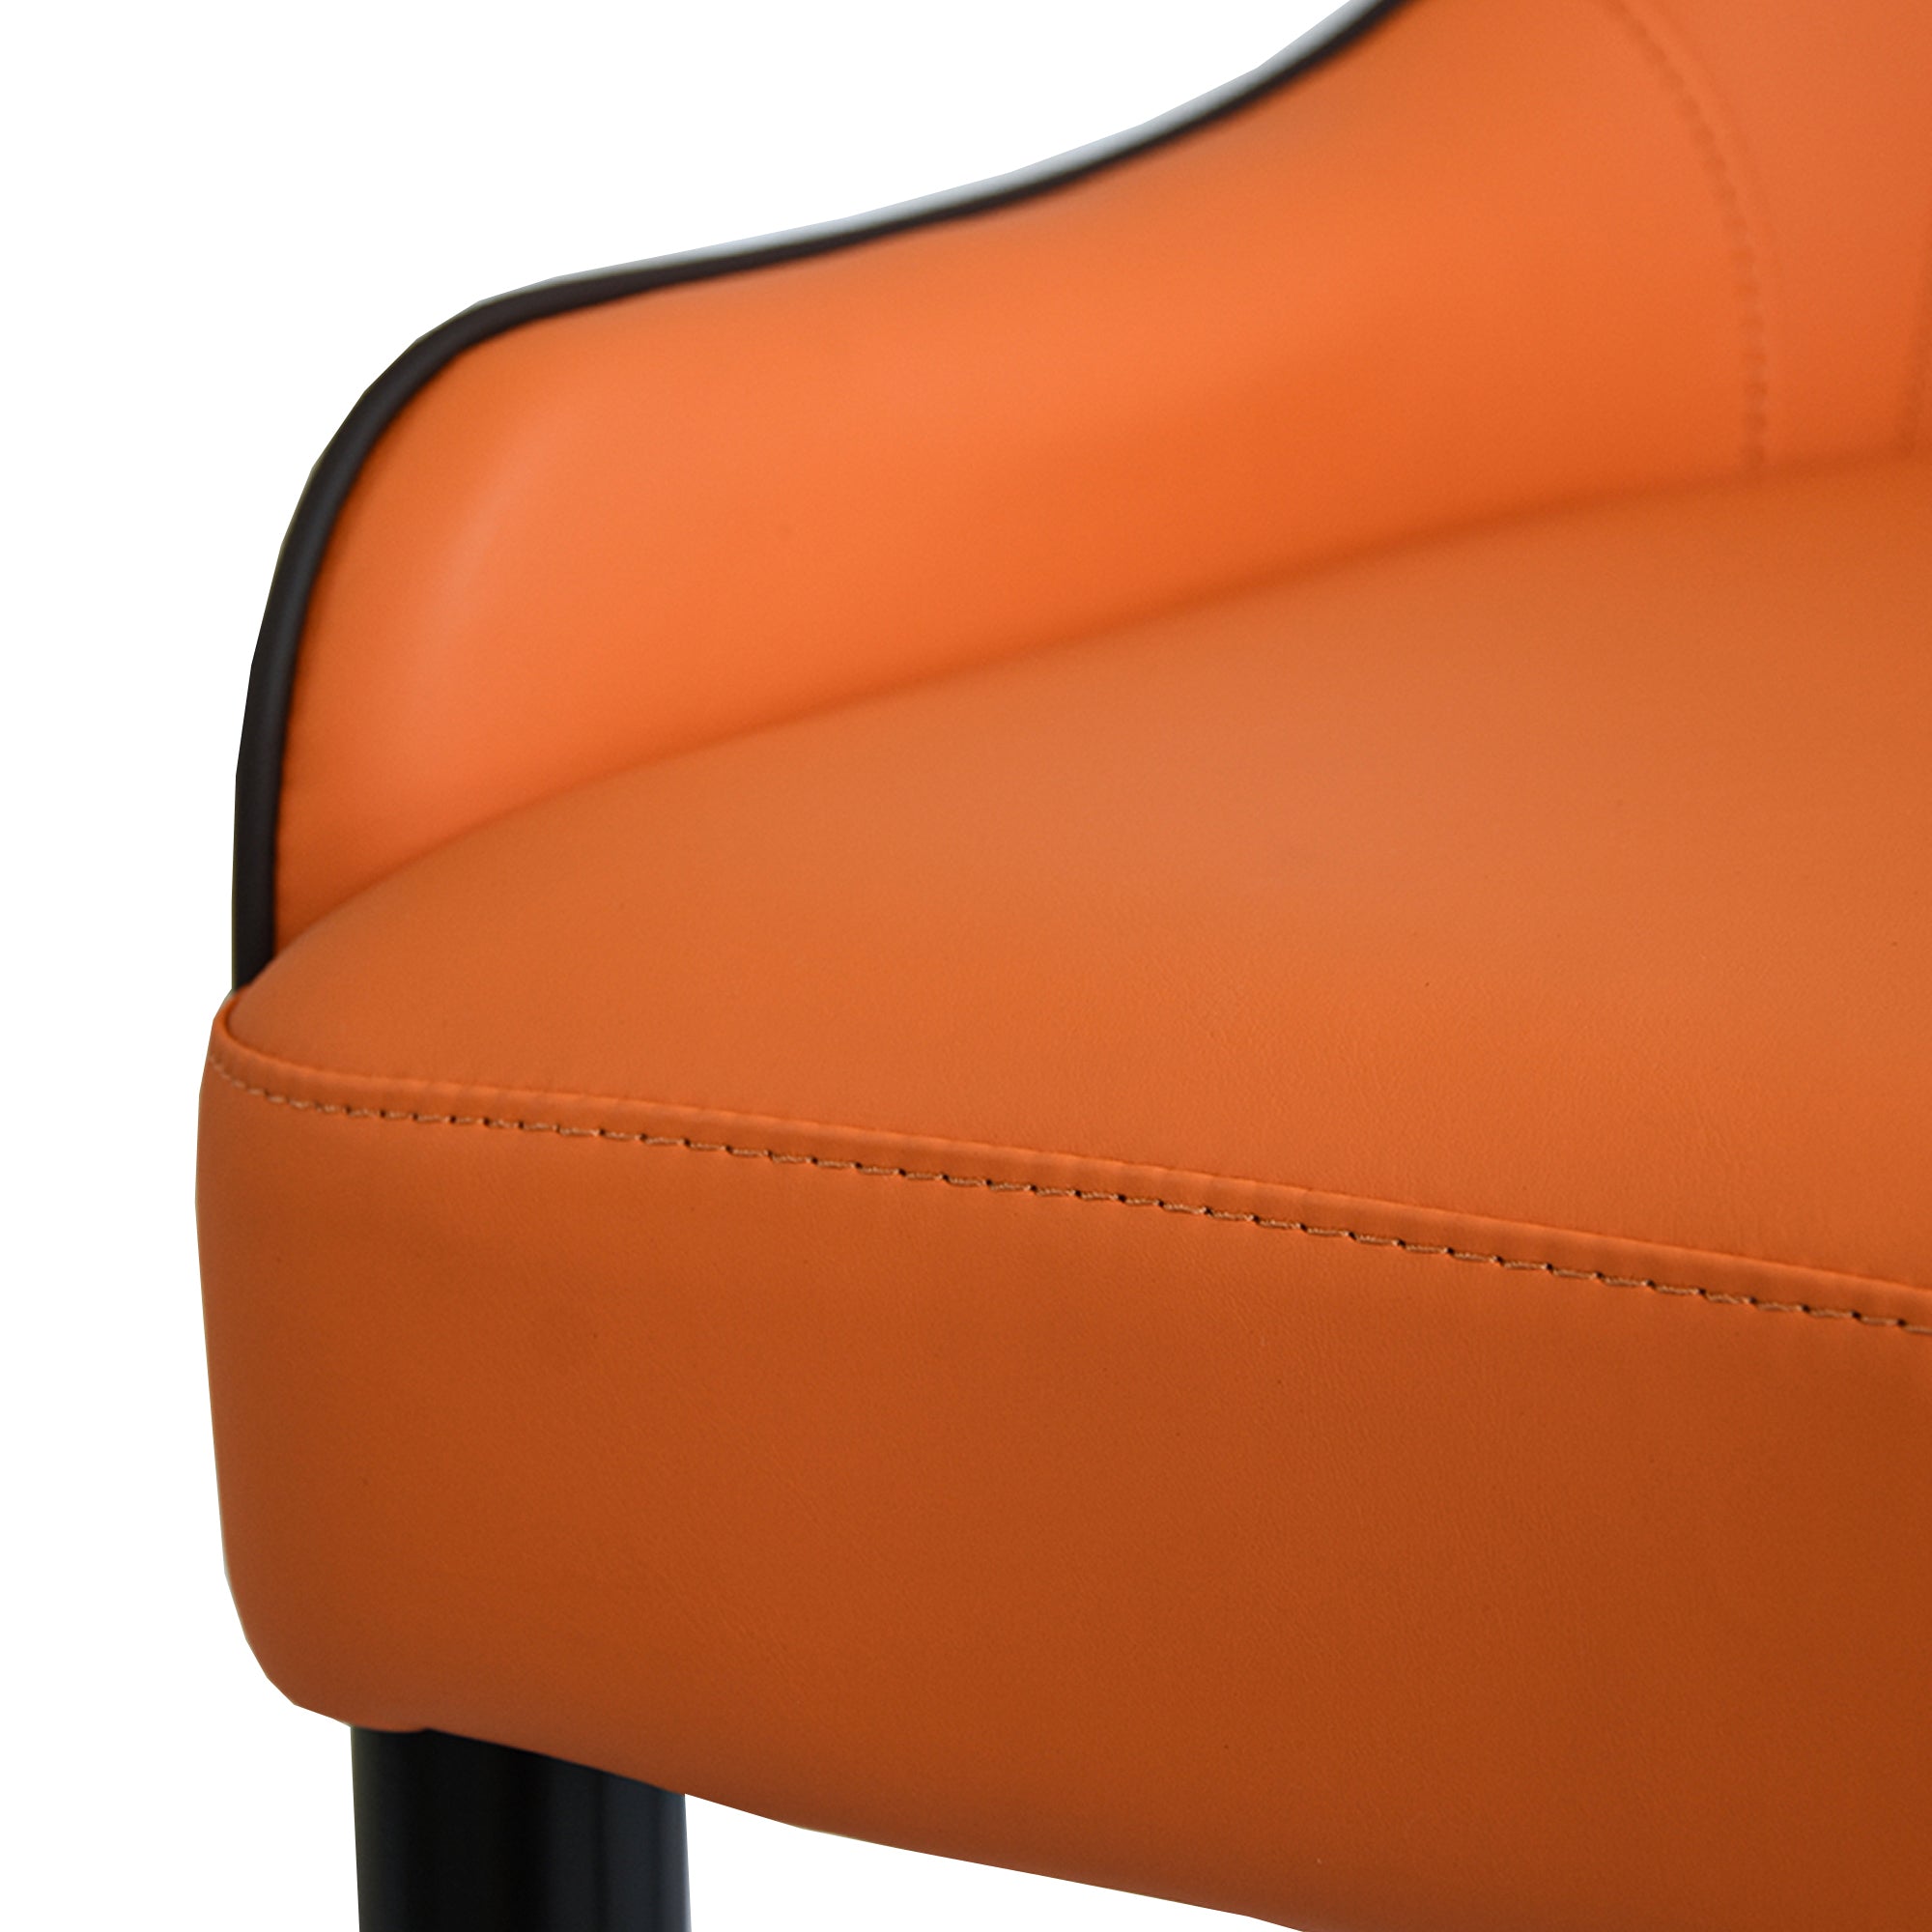 Modern PU Sponge-filled Dining Chairs (Set of 2) - Black and Orange